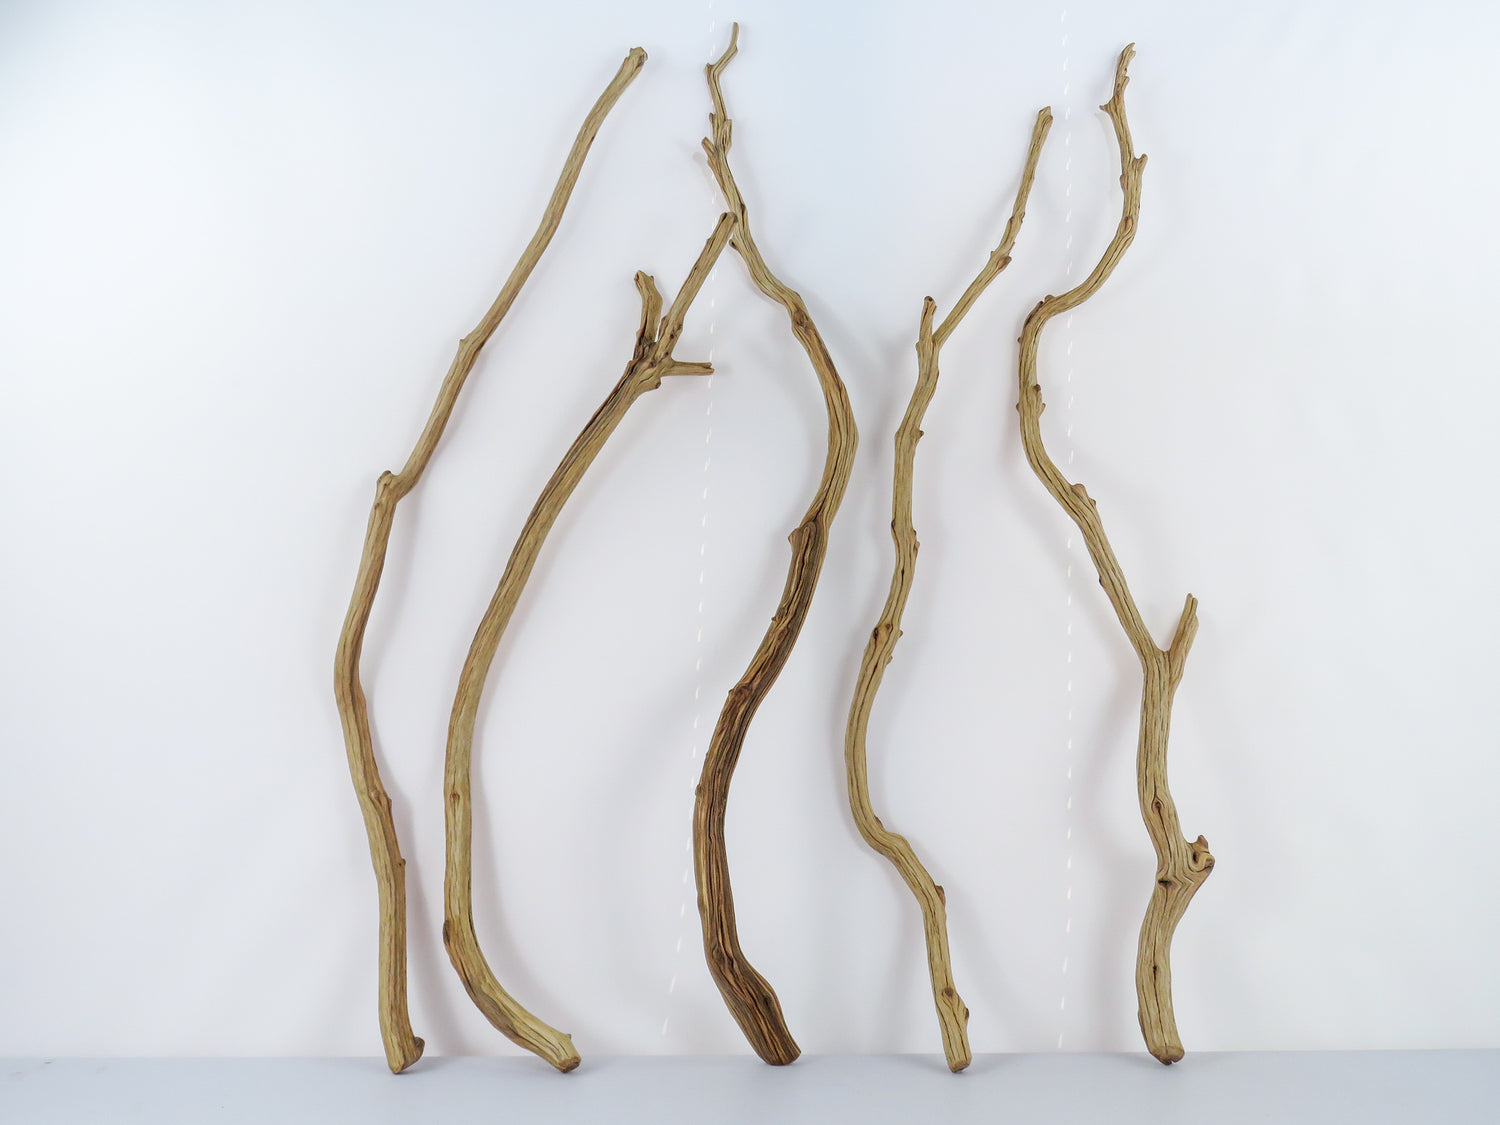 Manzanita Sticks and Logs